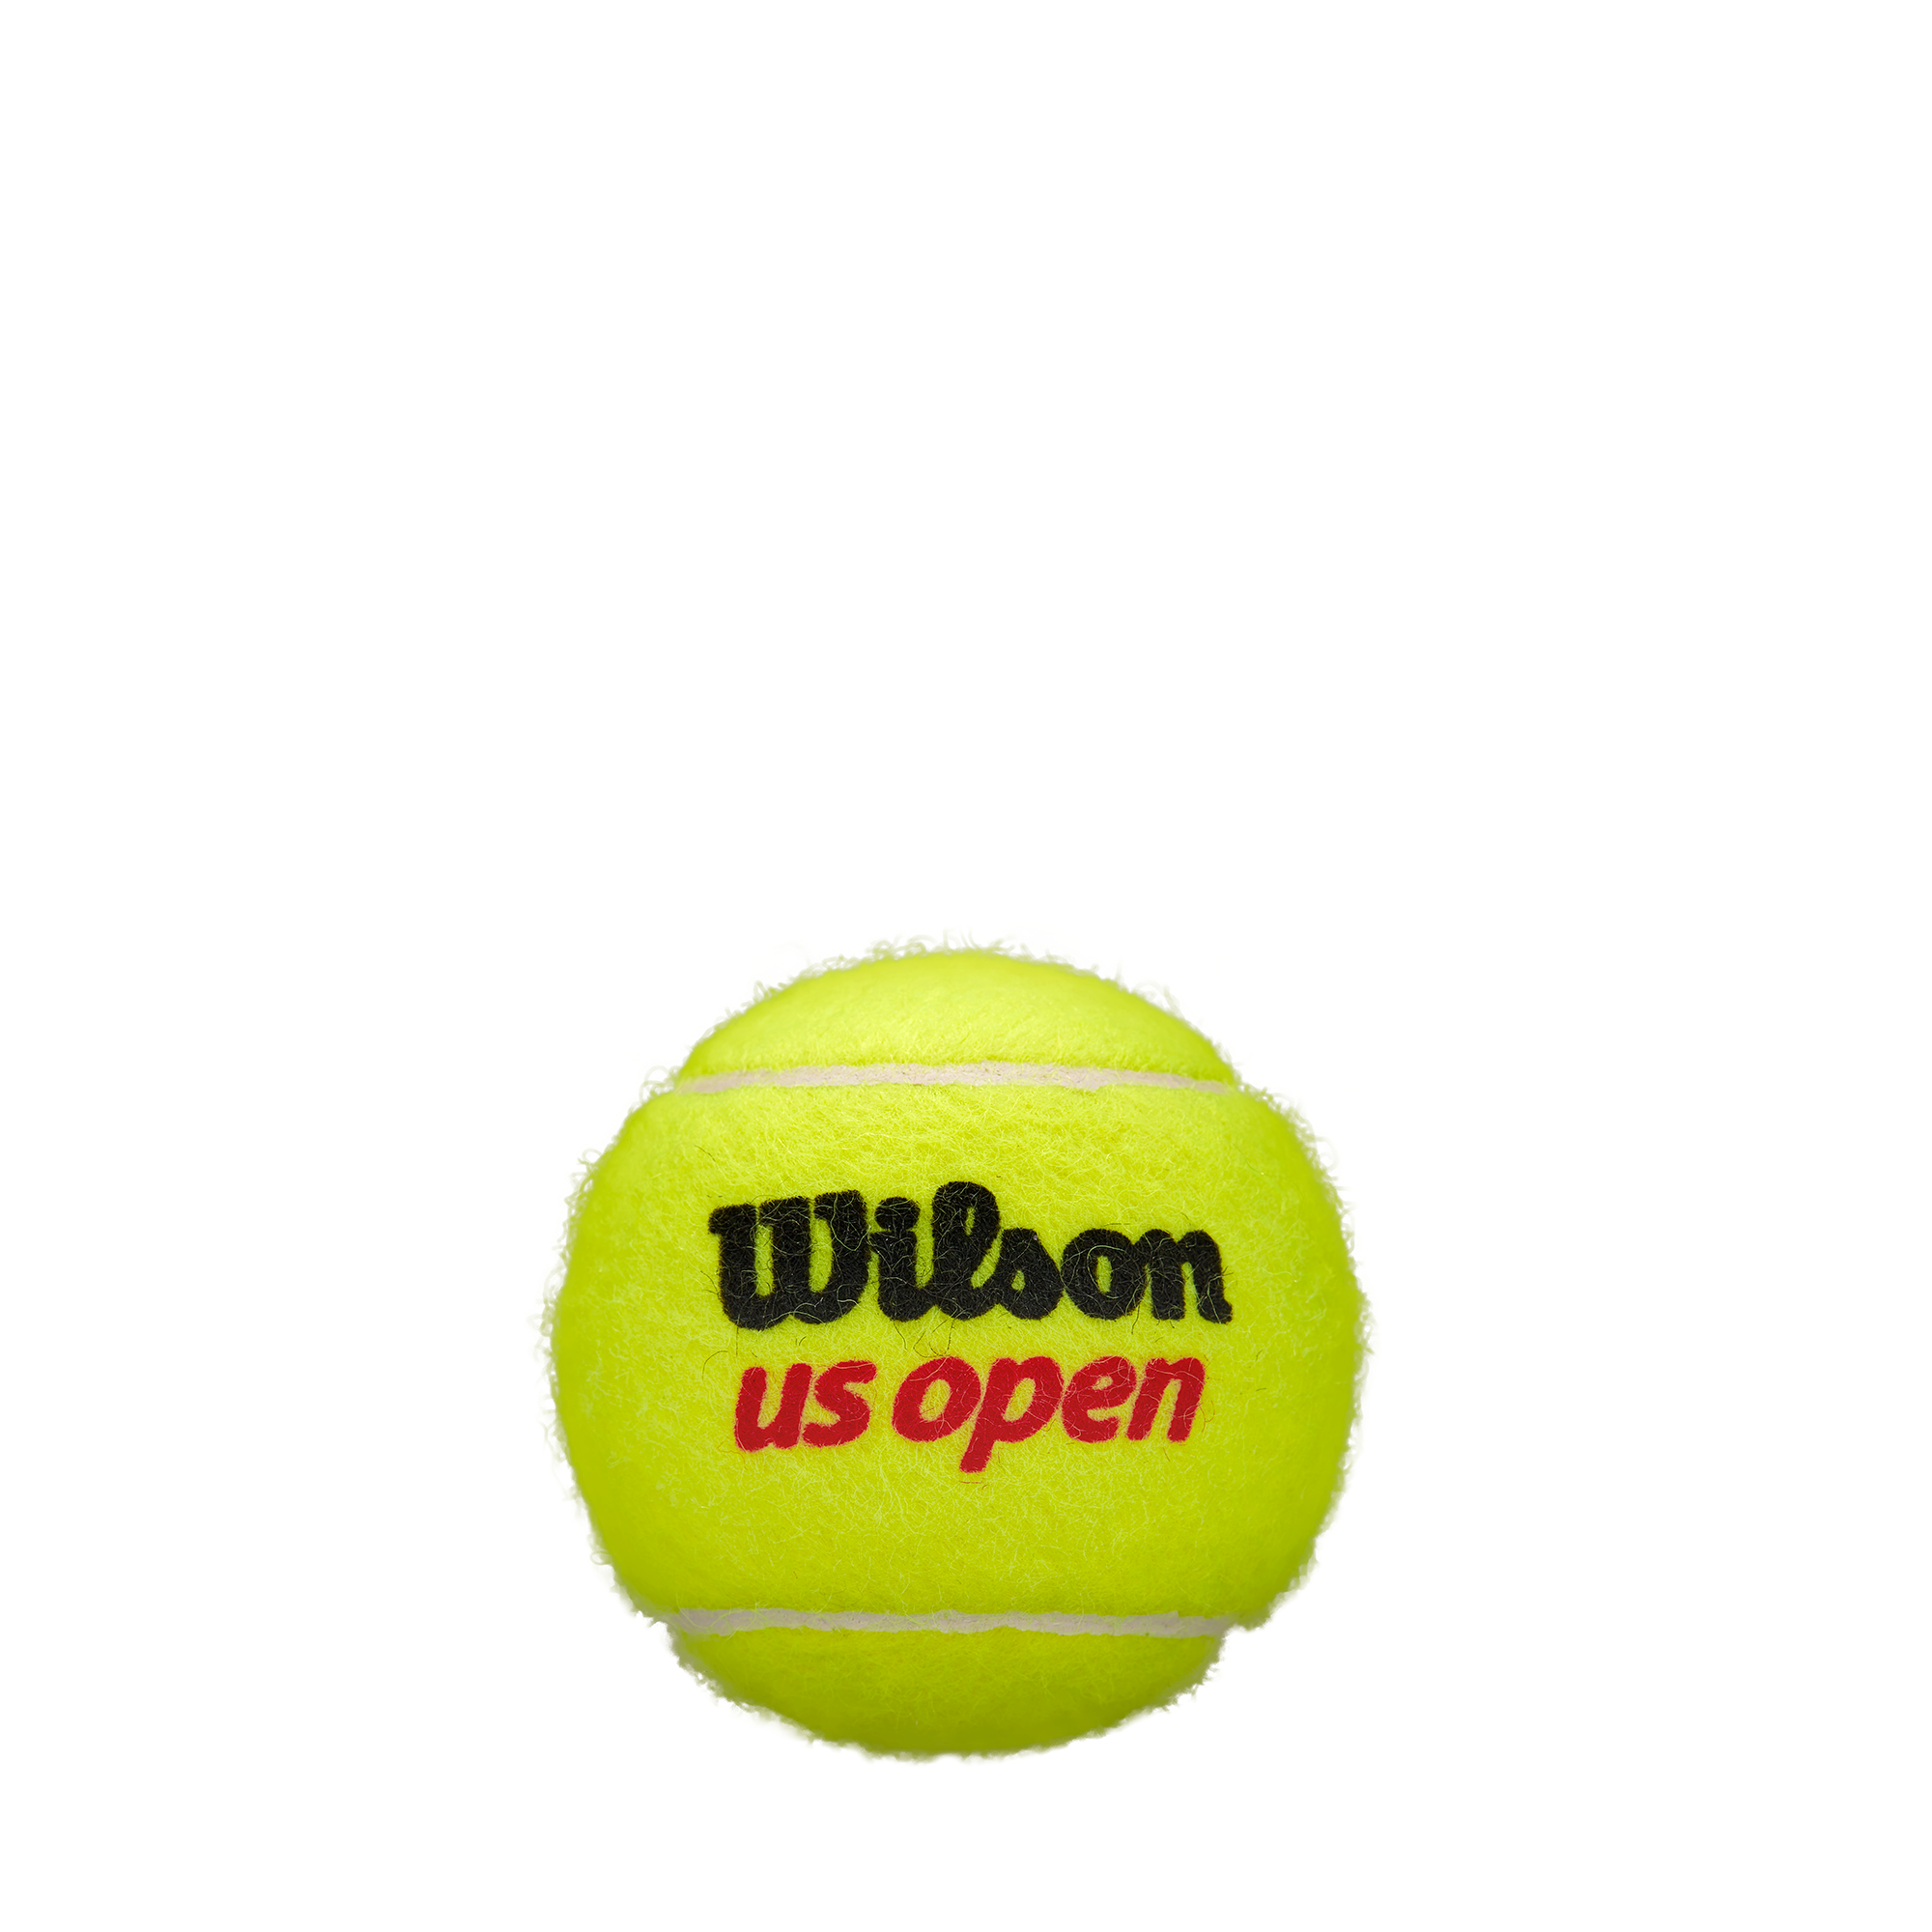 Wilson US Open Extra Duty 3-Balls Tennis Balls